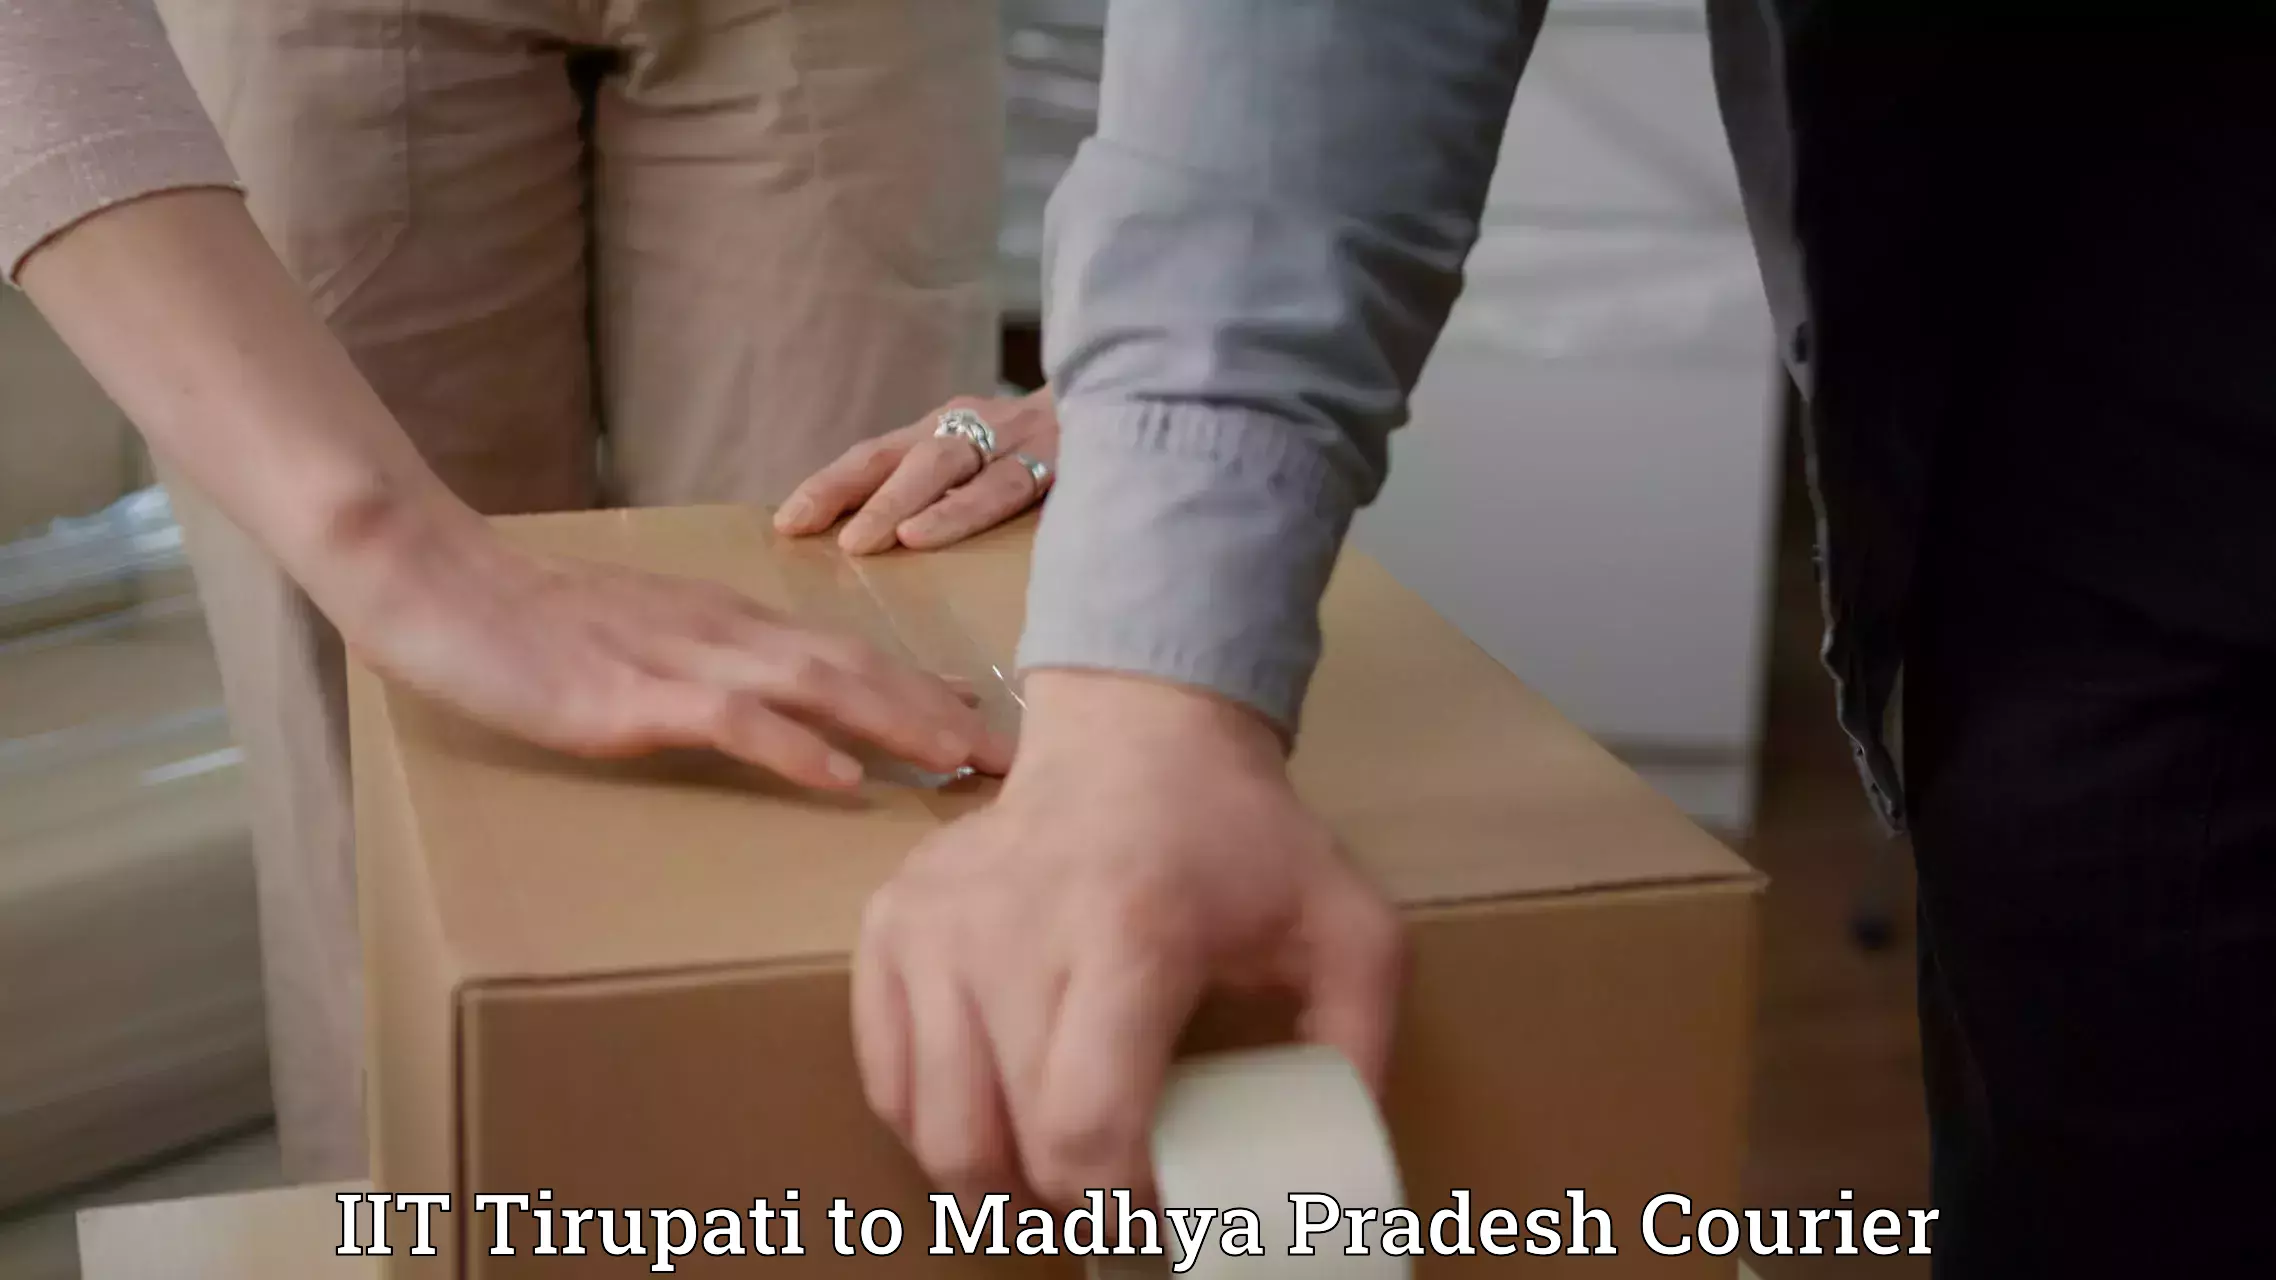 Customized shipping options IIT Tirupati to Garoth